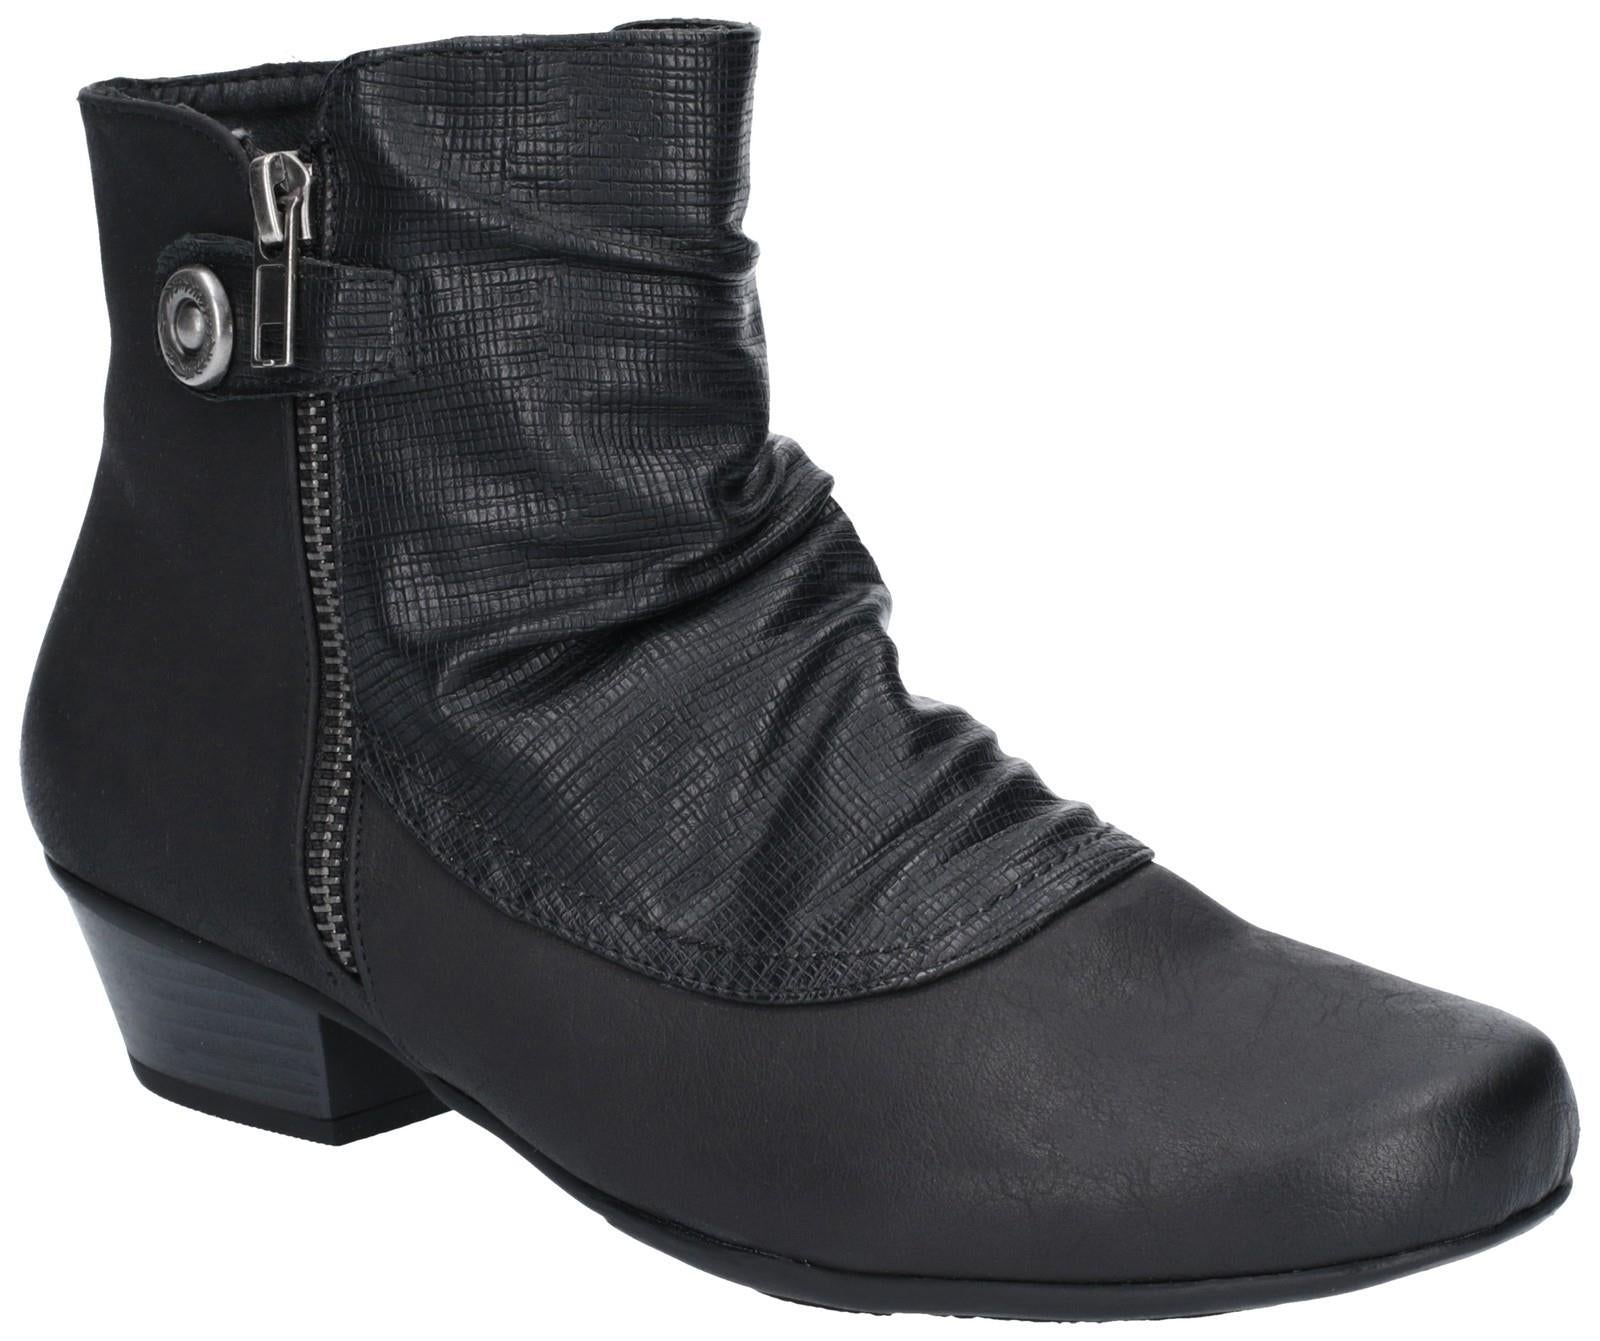 Fleet & Foster Jordie black ladies lightweight buckle and zipper ankle boot